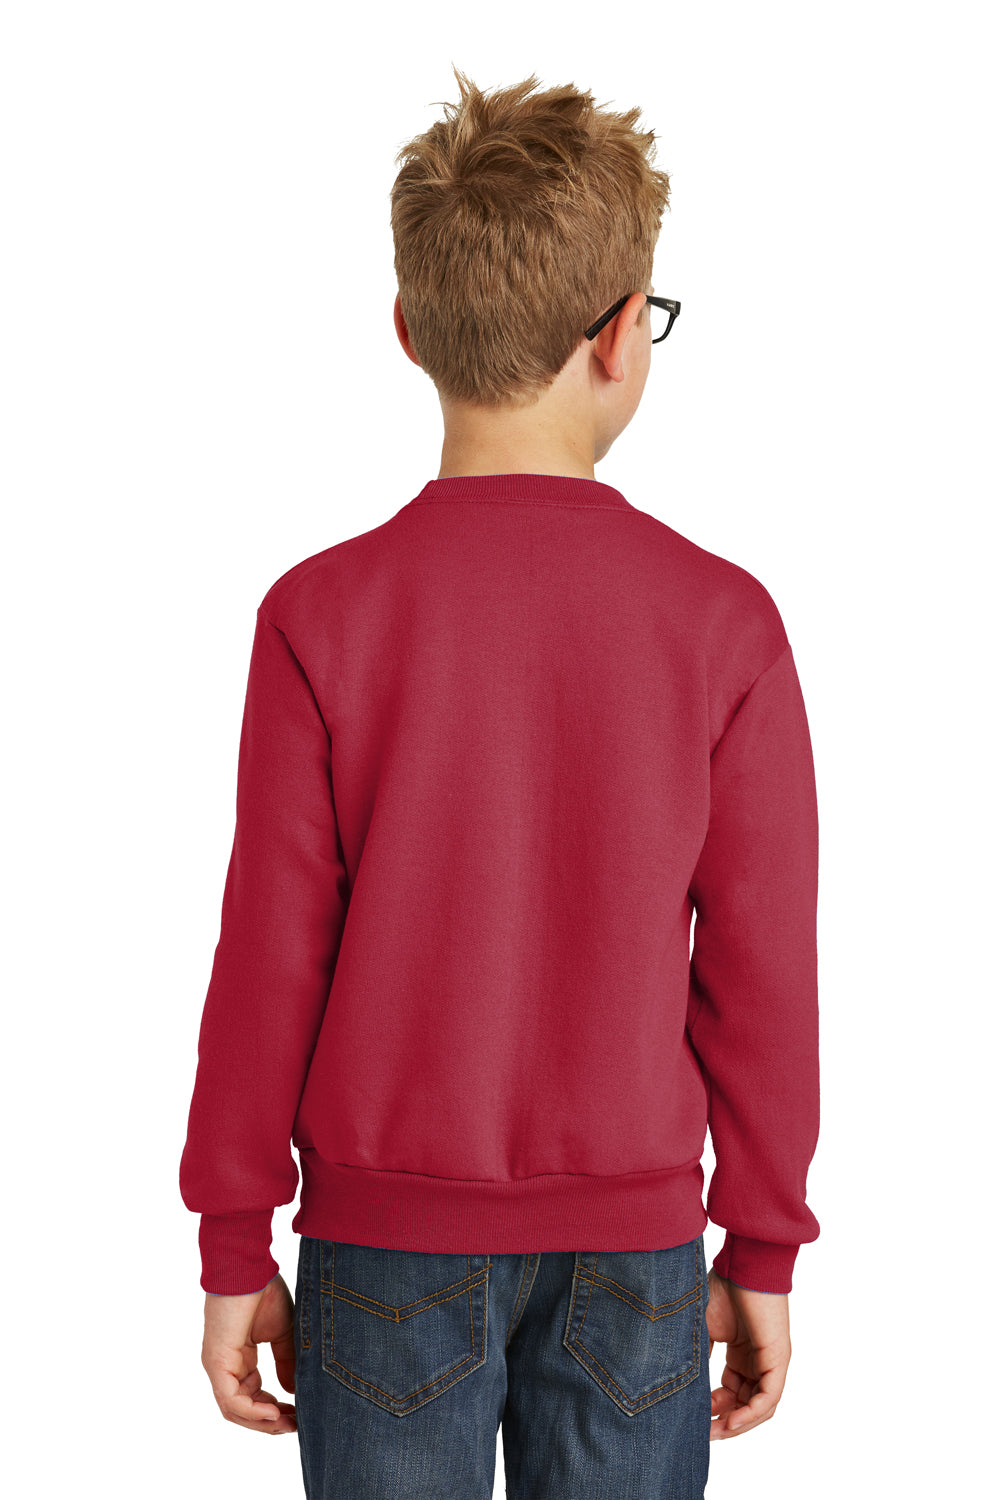 Port & Company PC90Y Youth Core Fleece Crewneck Sweatshirt Red Back